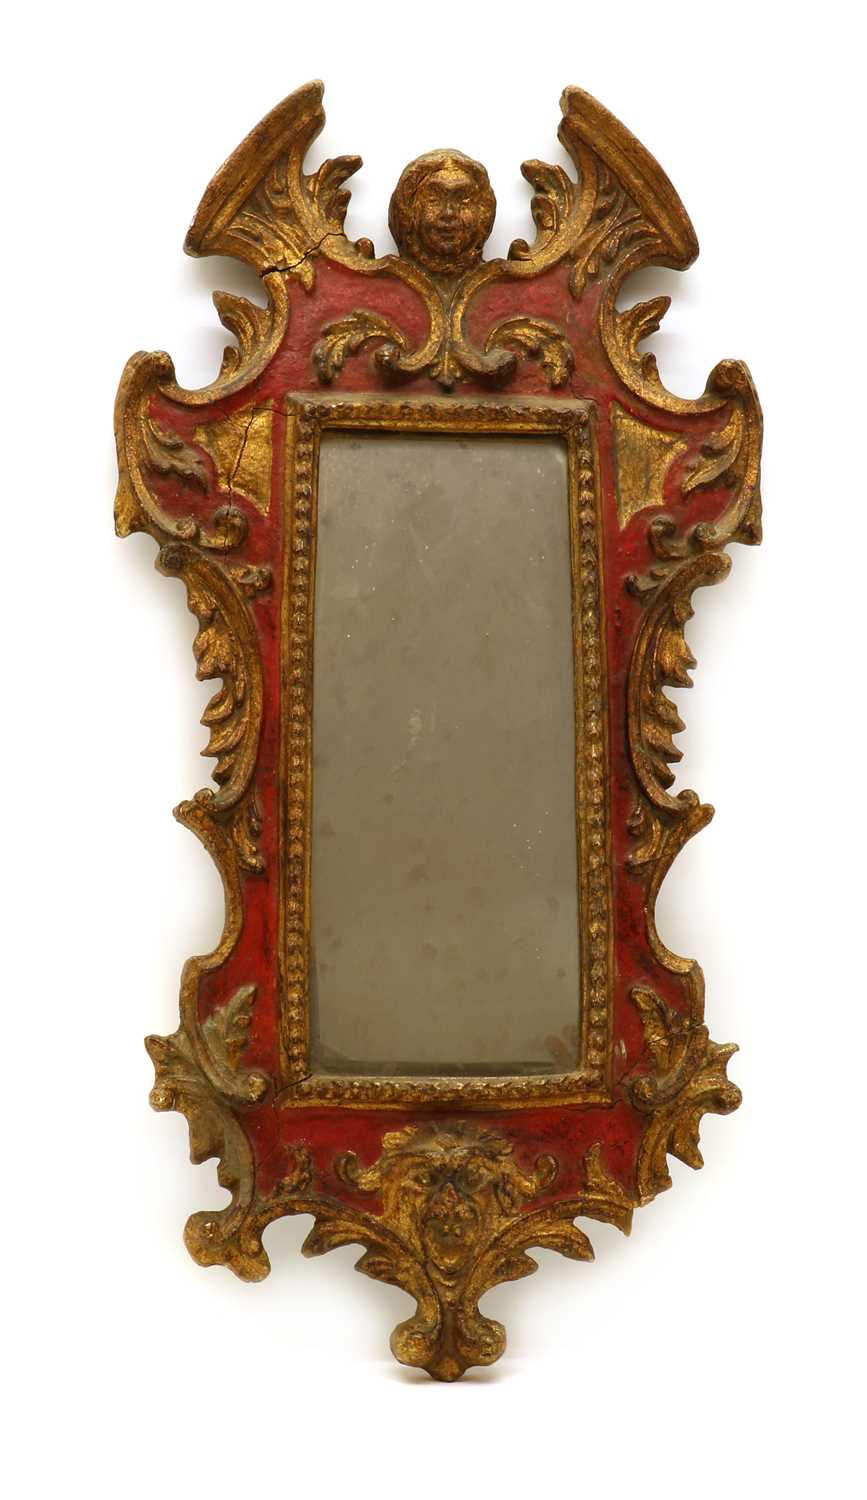 A Baroque style parcel gilt mirror